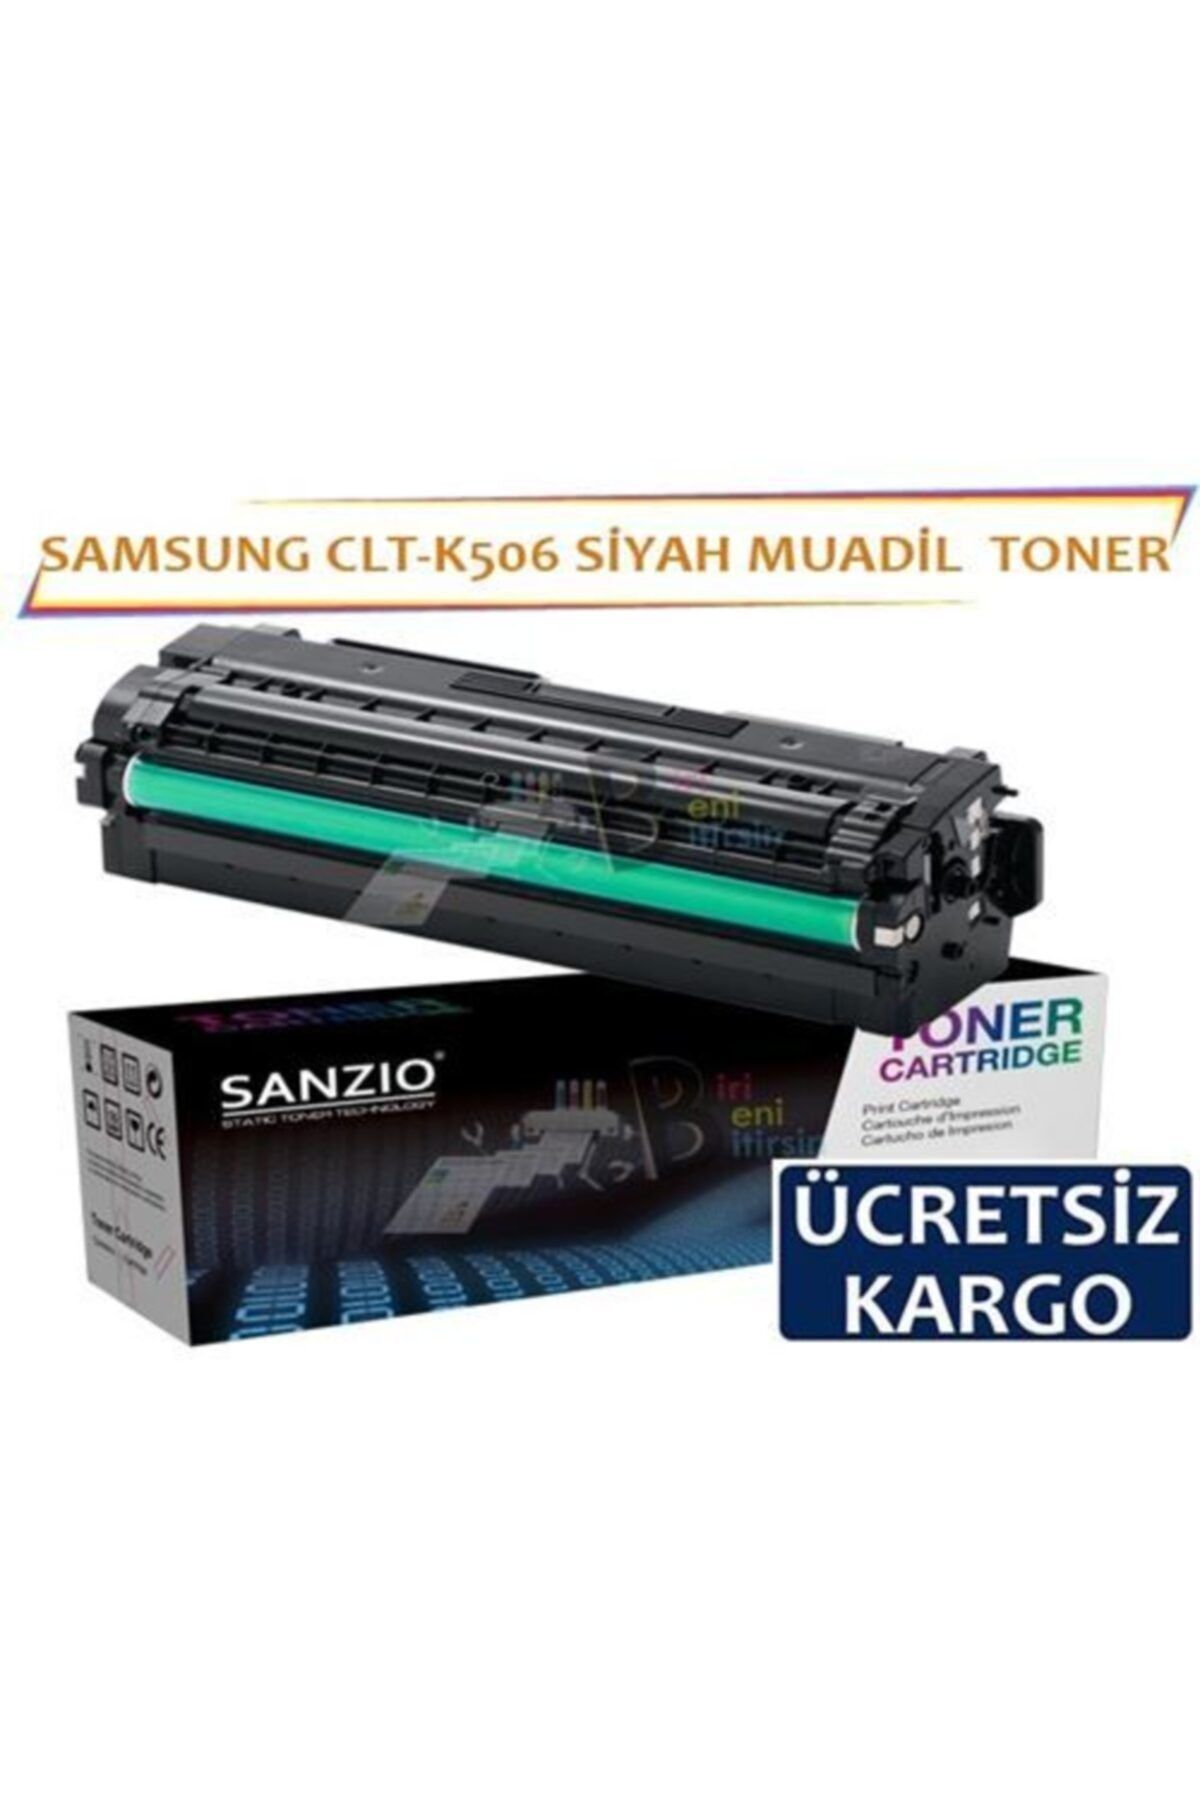 BBB For Samsung Clt-k506 Muadil Toner Siyah Clp 680nd Clx 6260